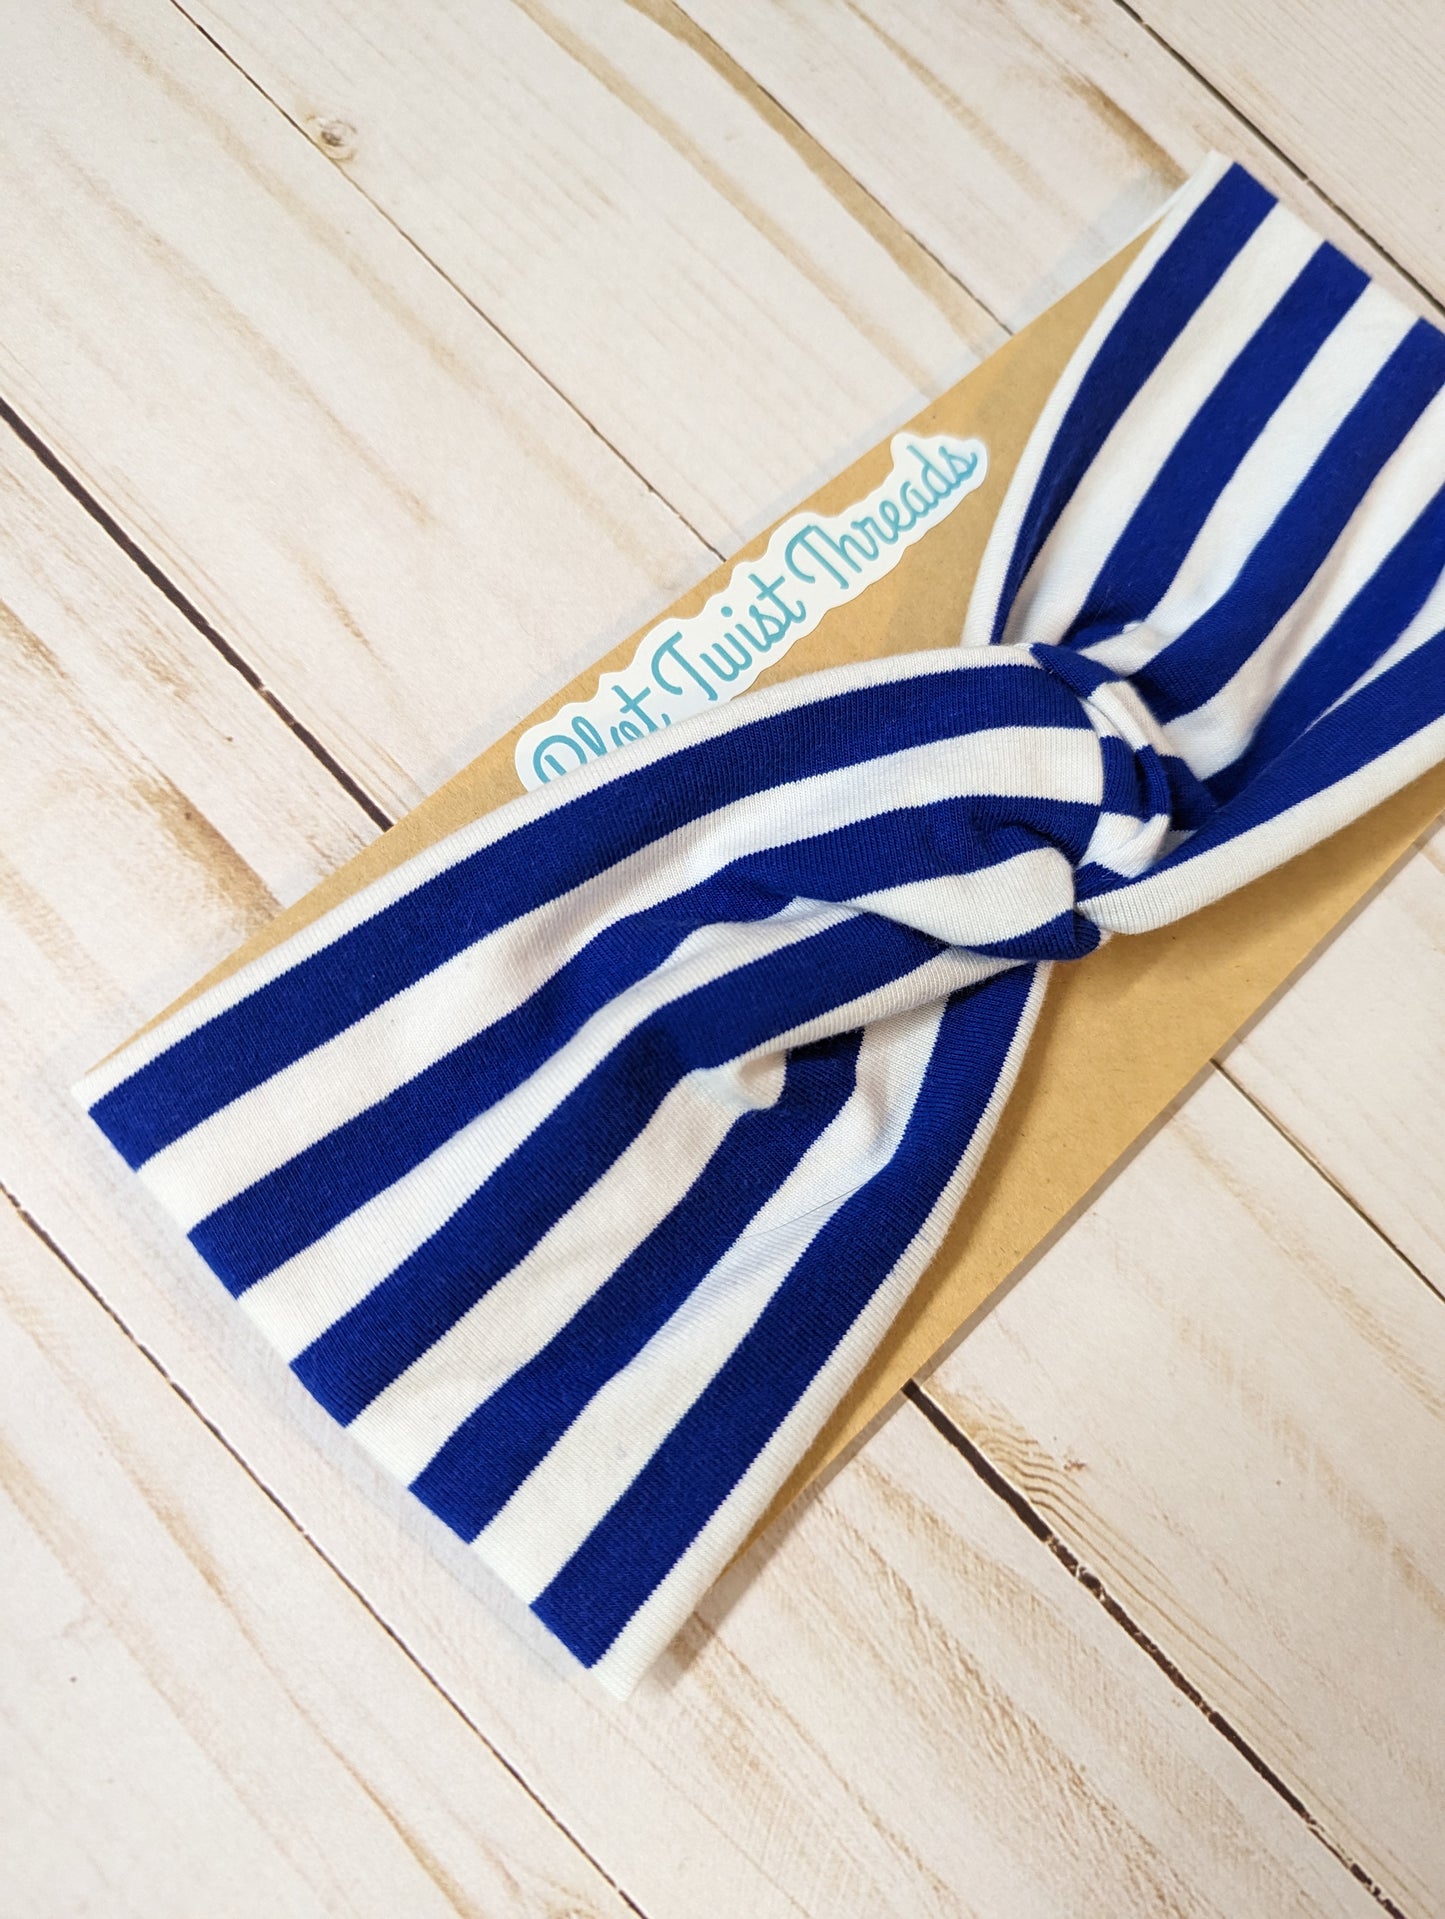 Adult Knot Headband - Blue and White Stripe